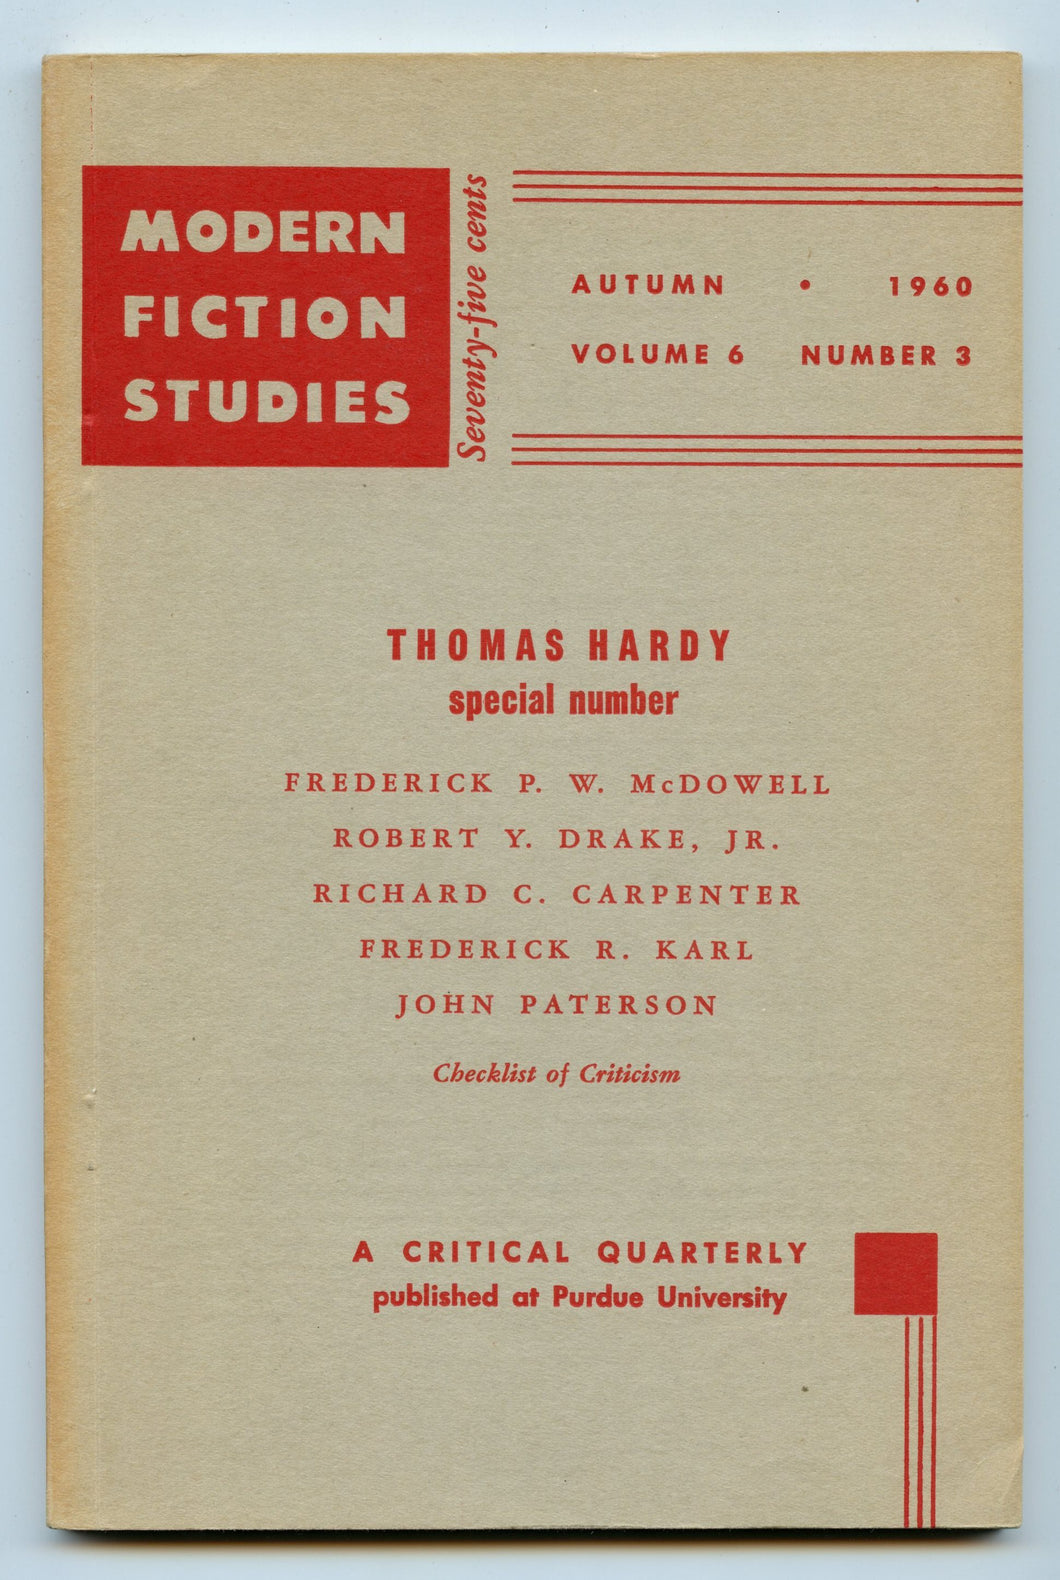 Modern Fiction Studies Autumn 1960